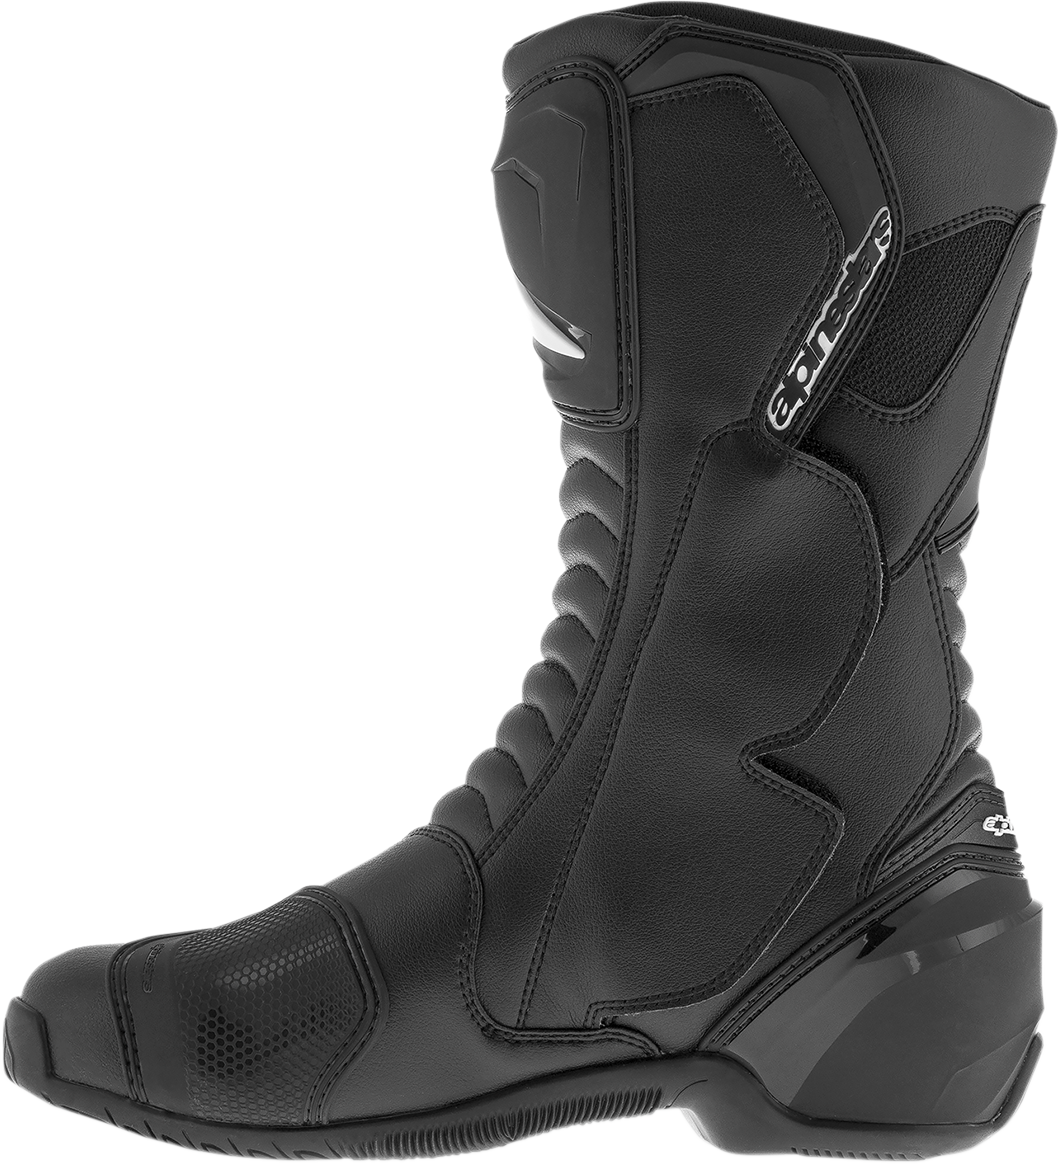 ALPINESTARS SMX-S Boots - Black - US 13.5 / EU 49 224351710049